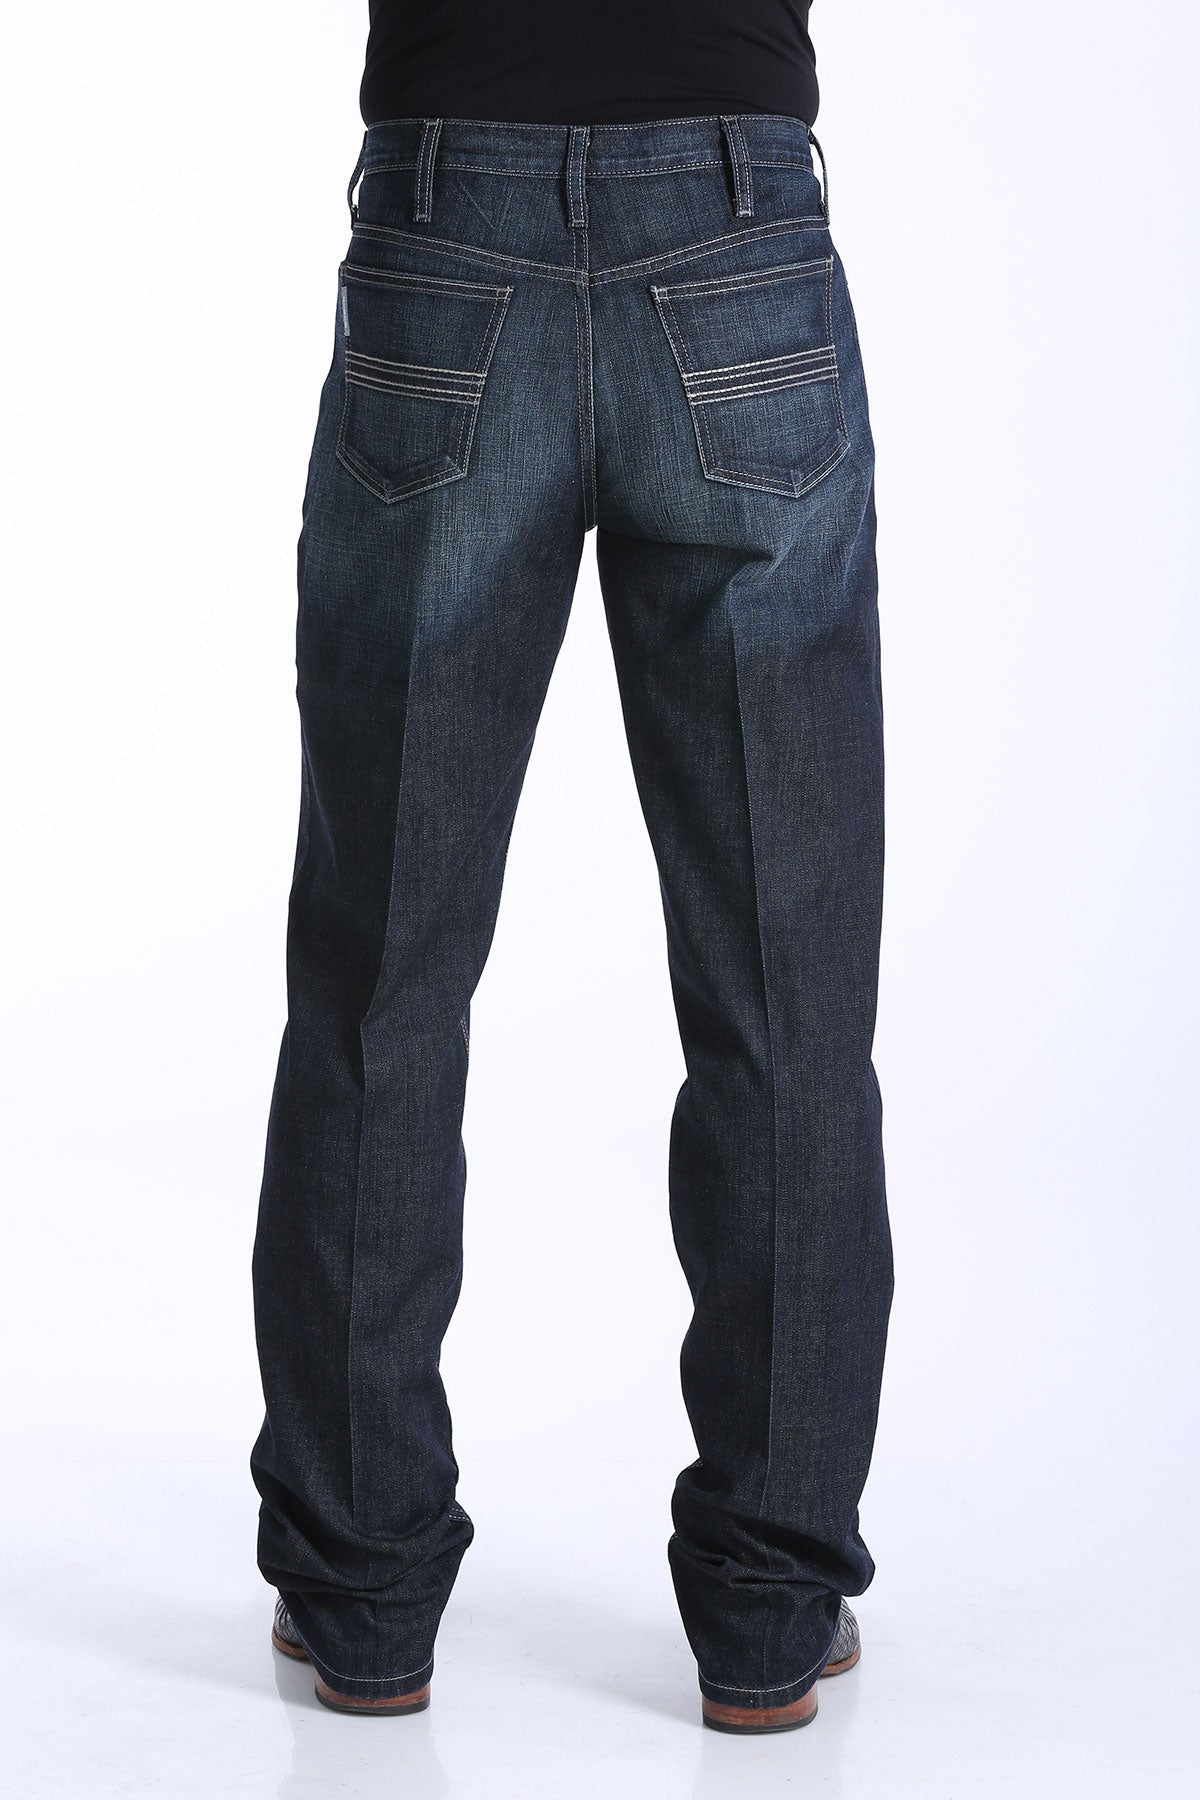 mens cinch silver label jeans